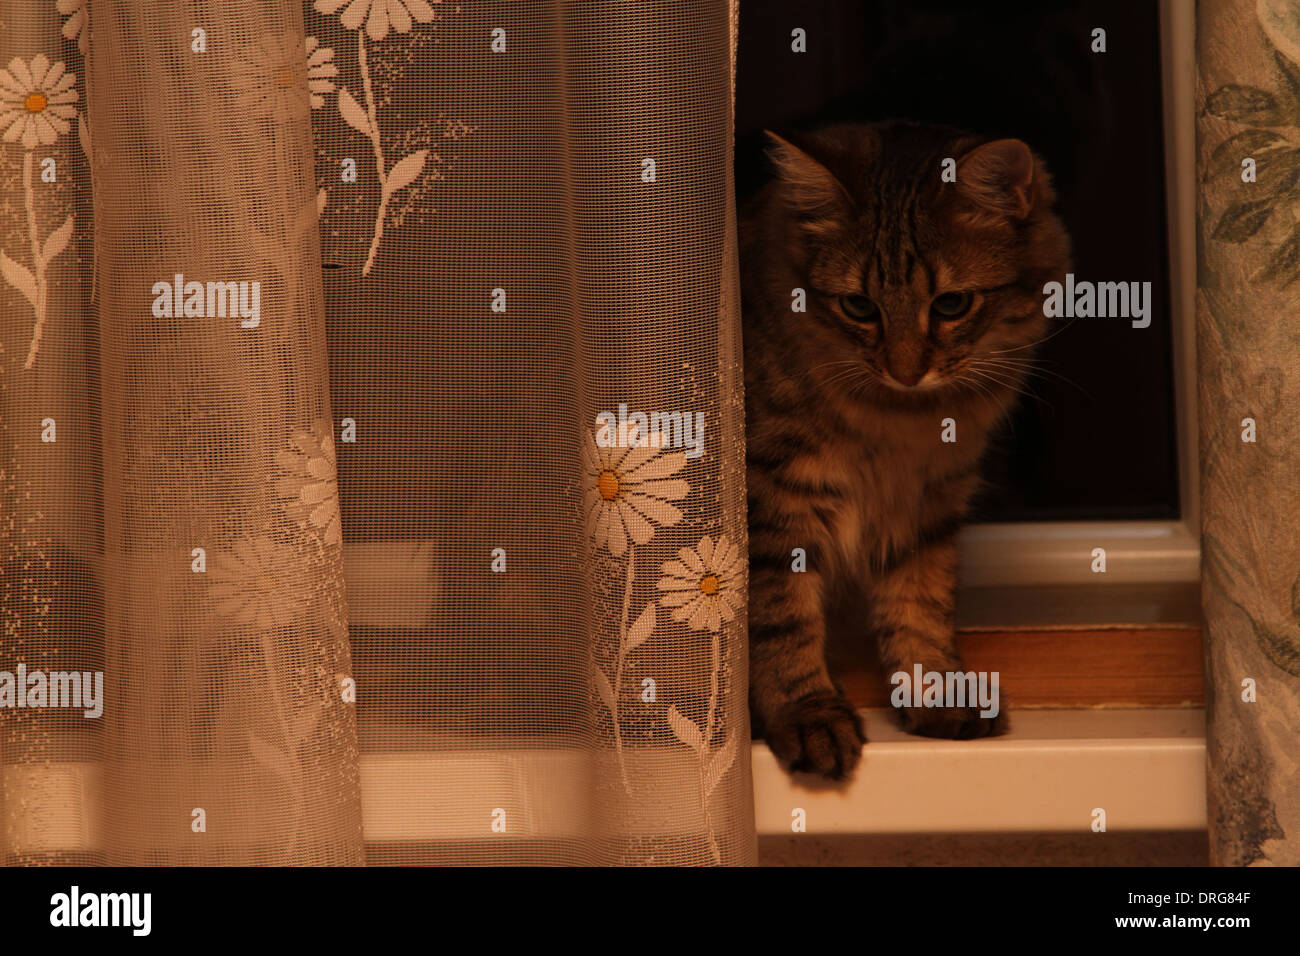 Striped kitten standing in a window sill Stock Photo